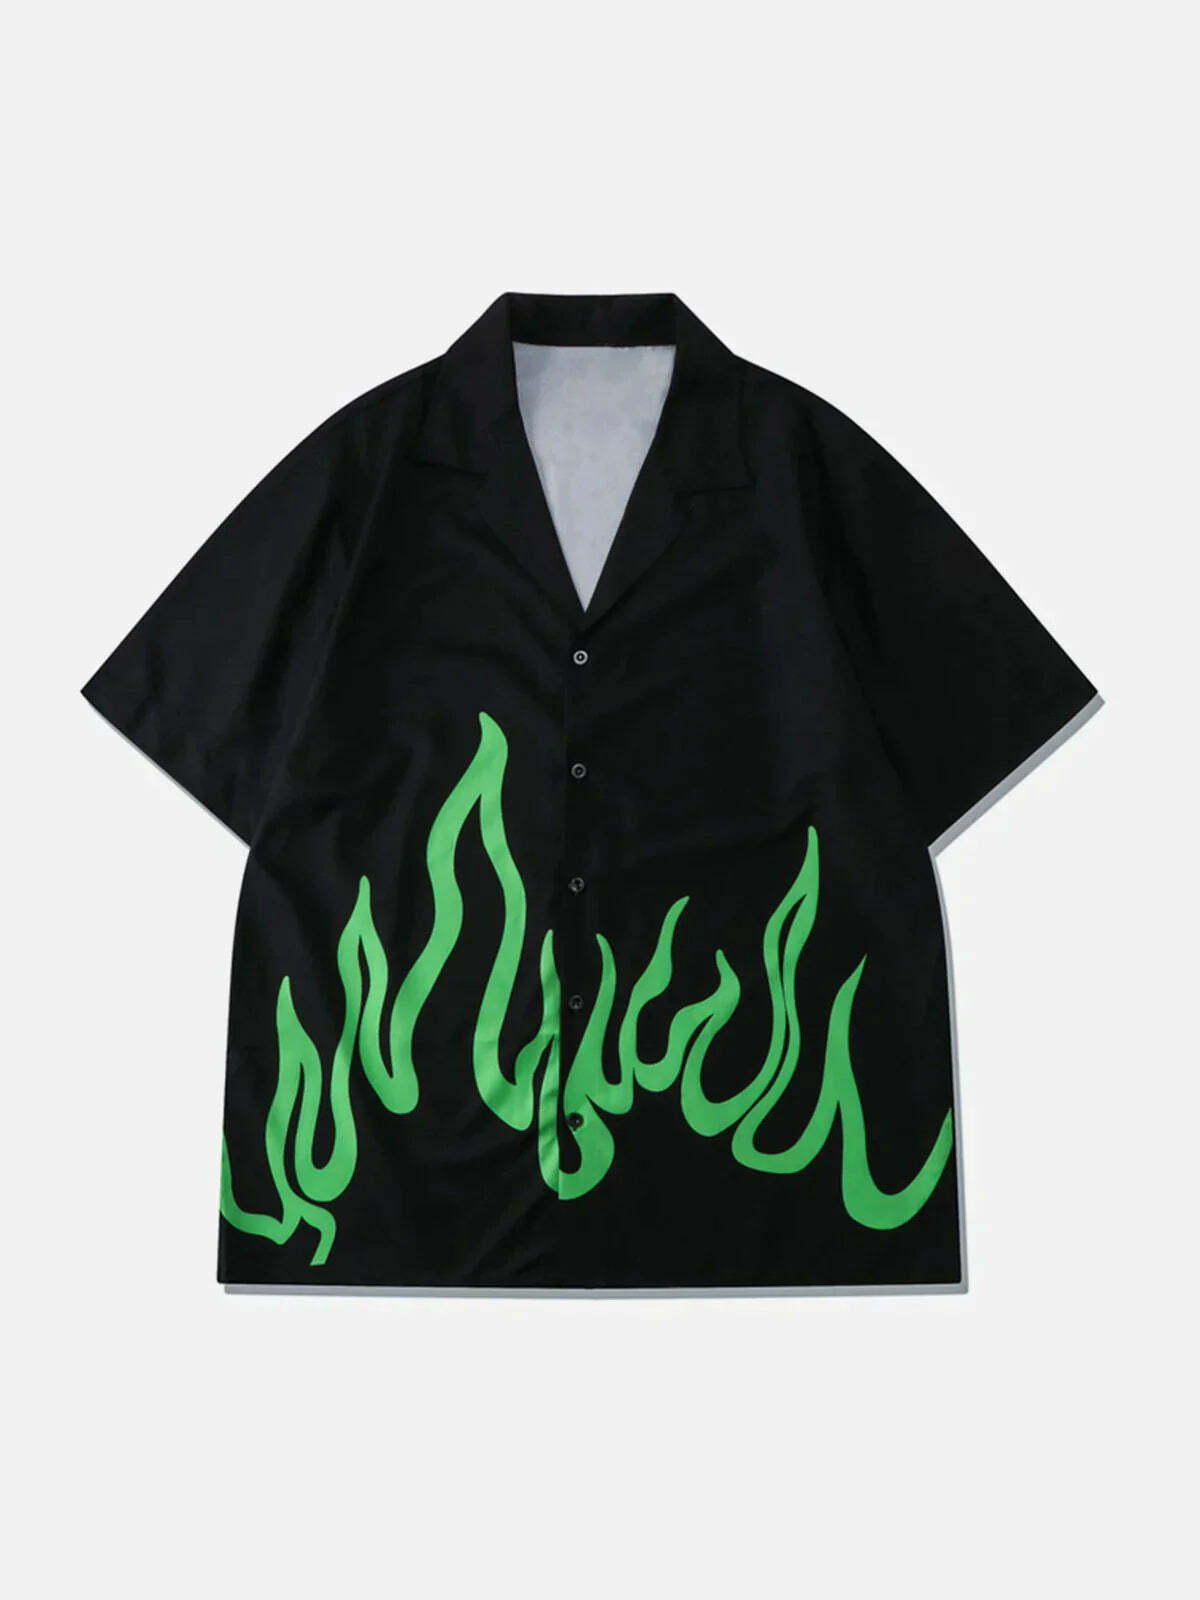 dynamic flame print shirt edgy  retro streetwear staple 6586